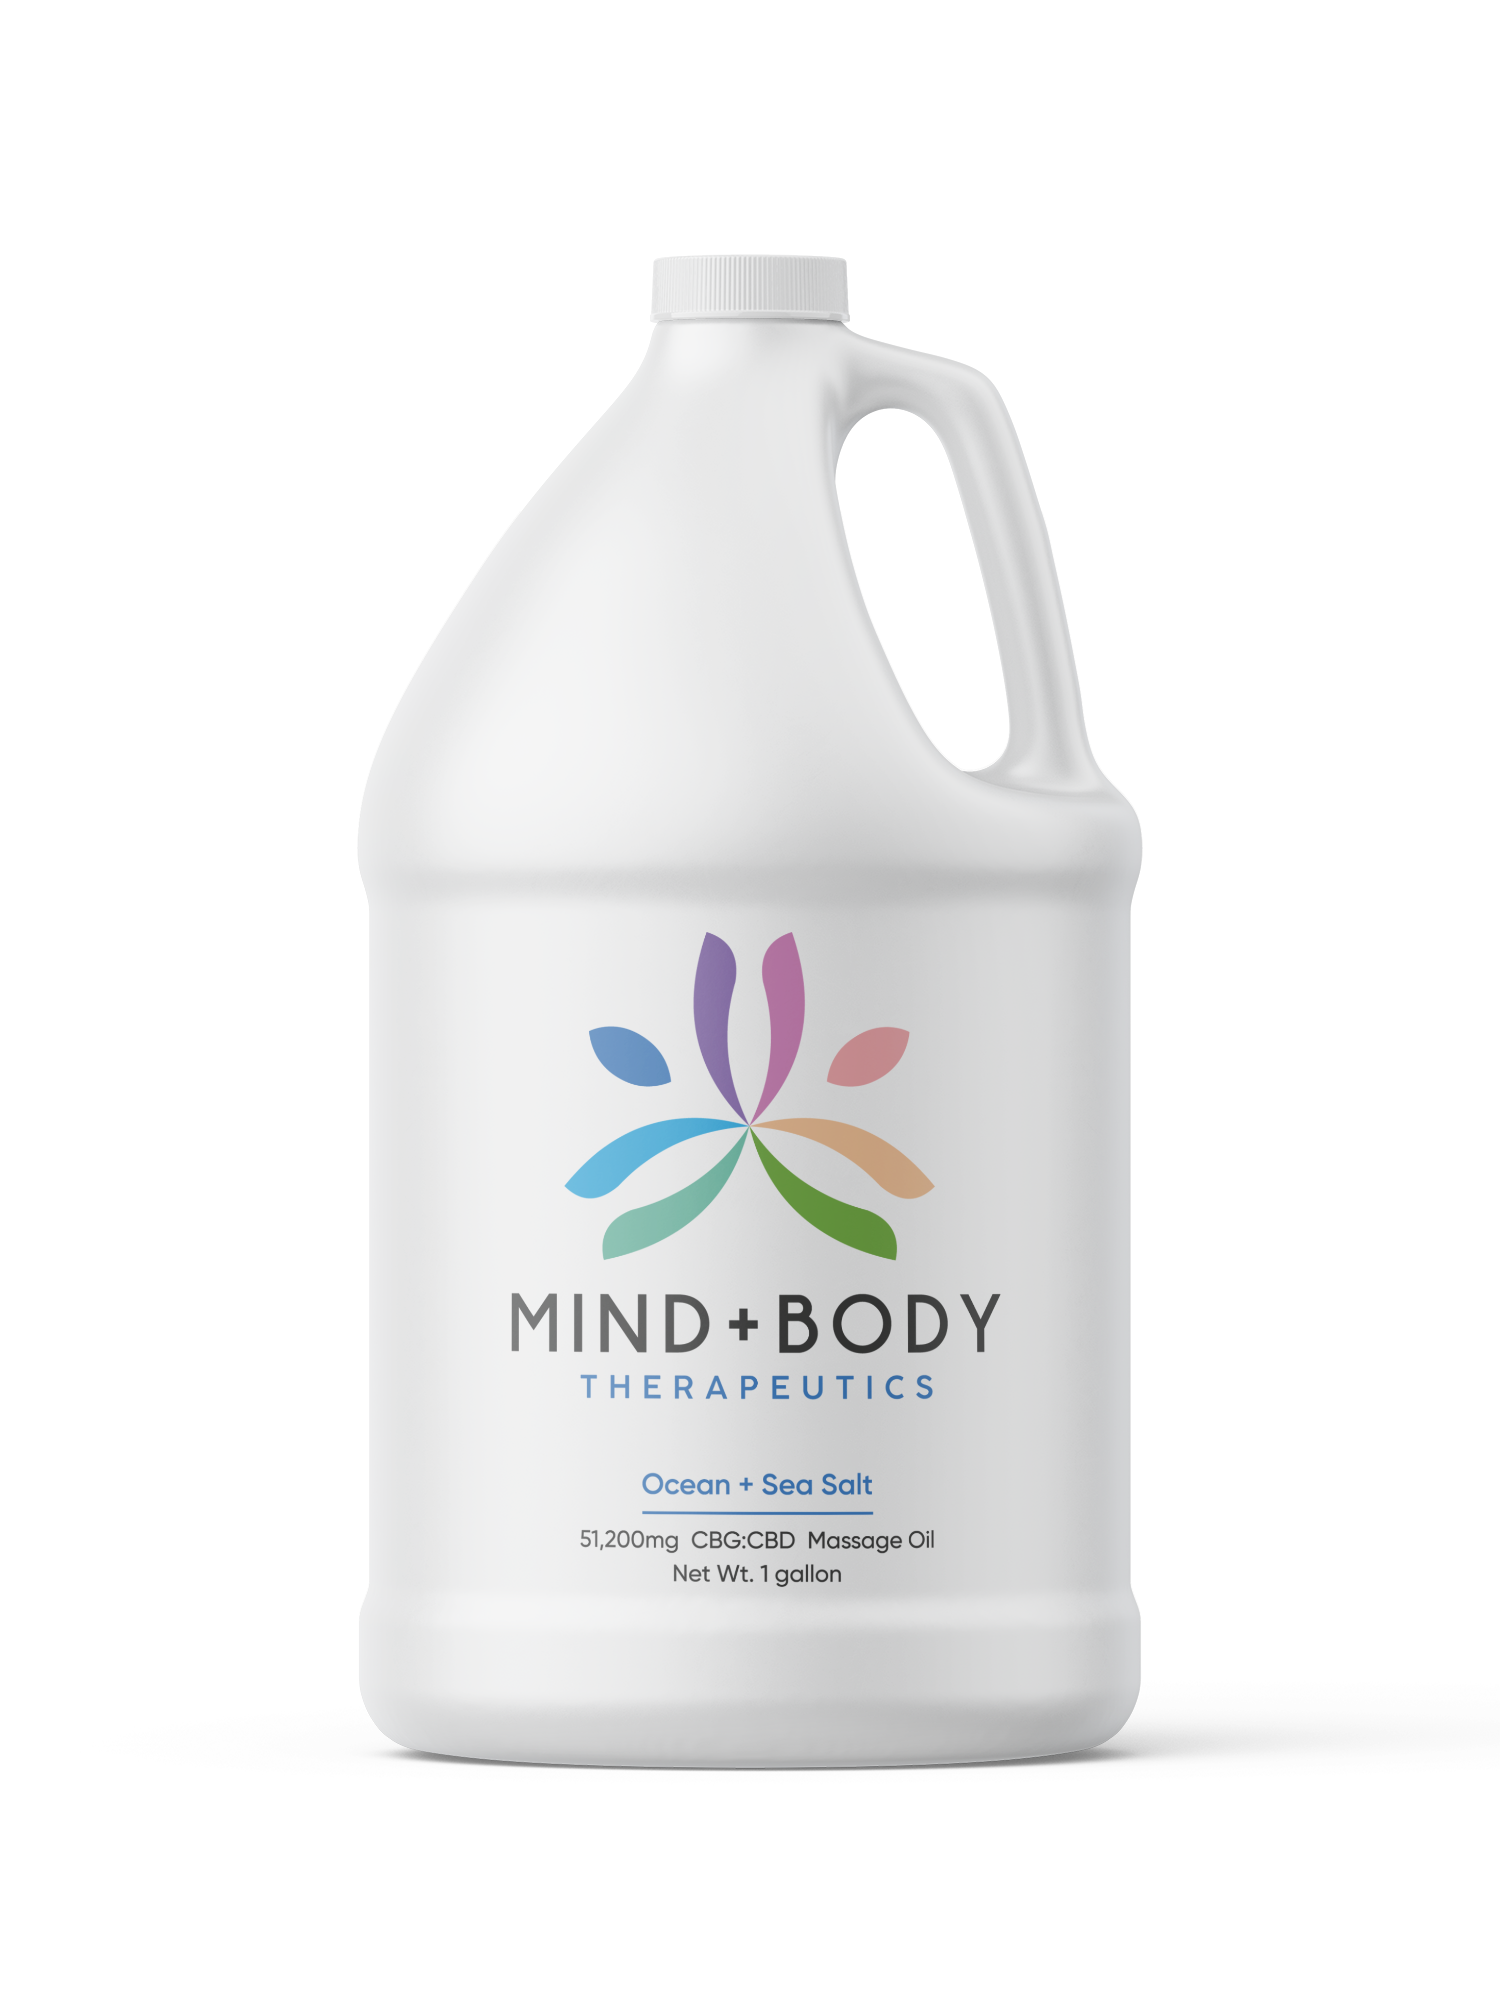 Mind+Body Therapeutics CBG:CBD 51,200mg Massage Oil 1 Gallon - Ocean + Sea Salt - hhemp.co Wholesale 